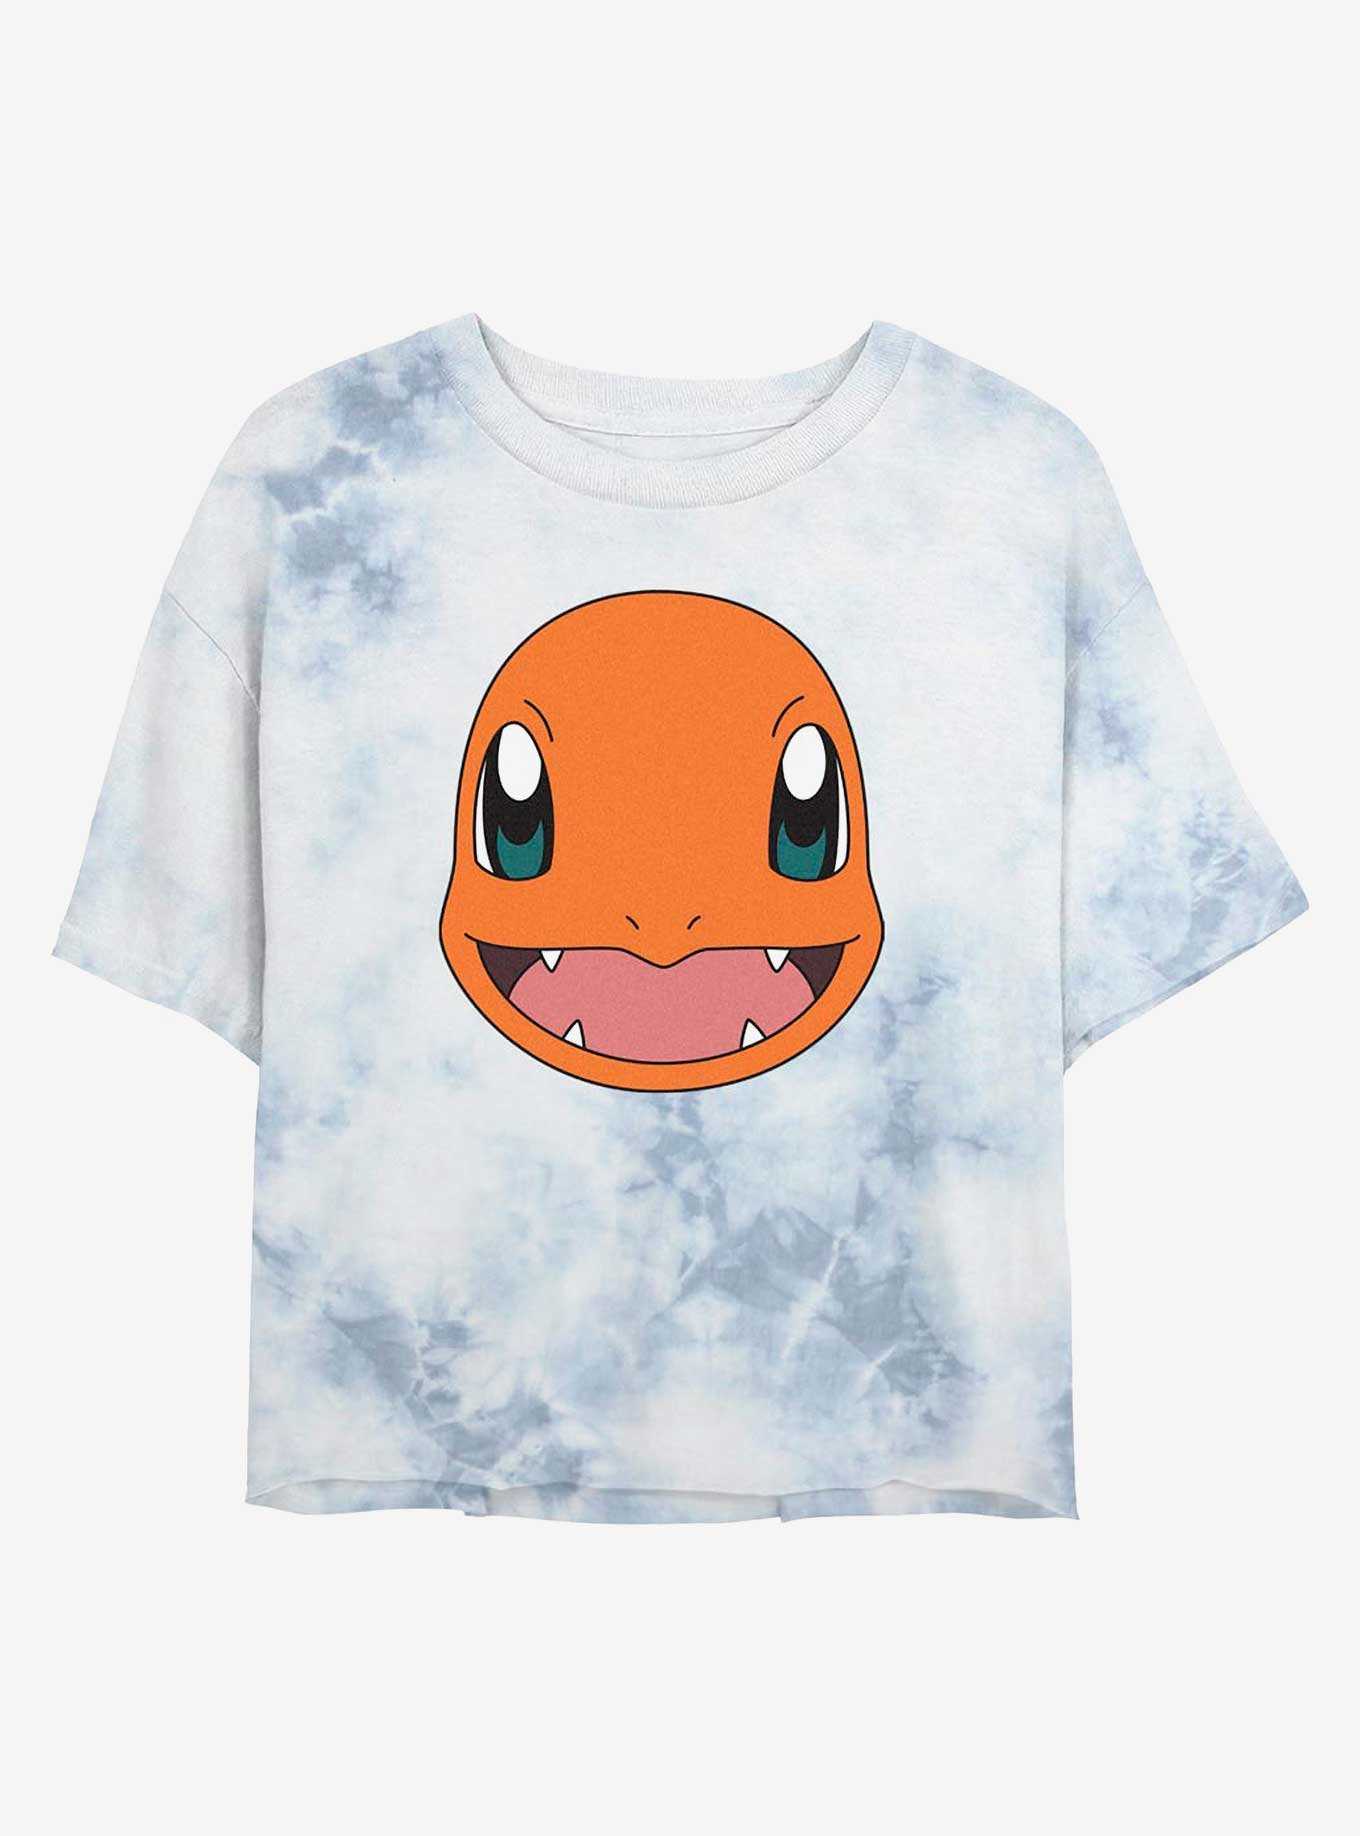 Pokemon Charmander Face Tie-Dye Girls Crop T-Shirt, , hi-res